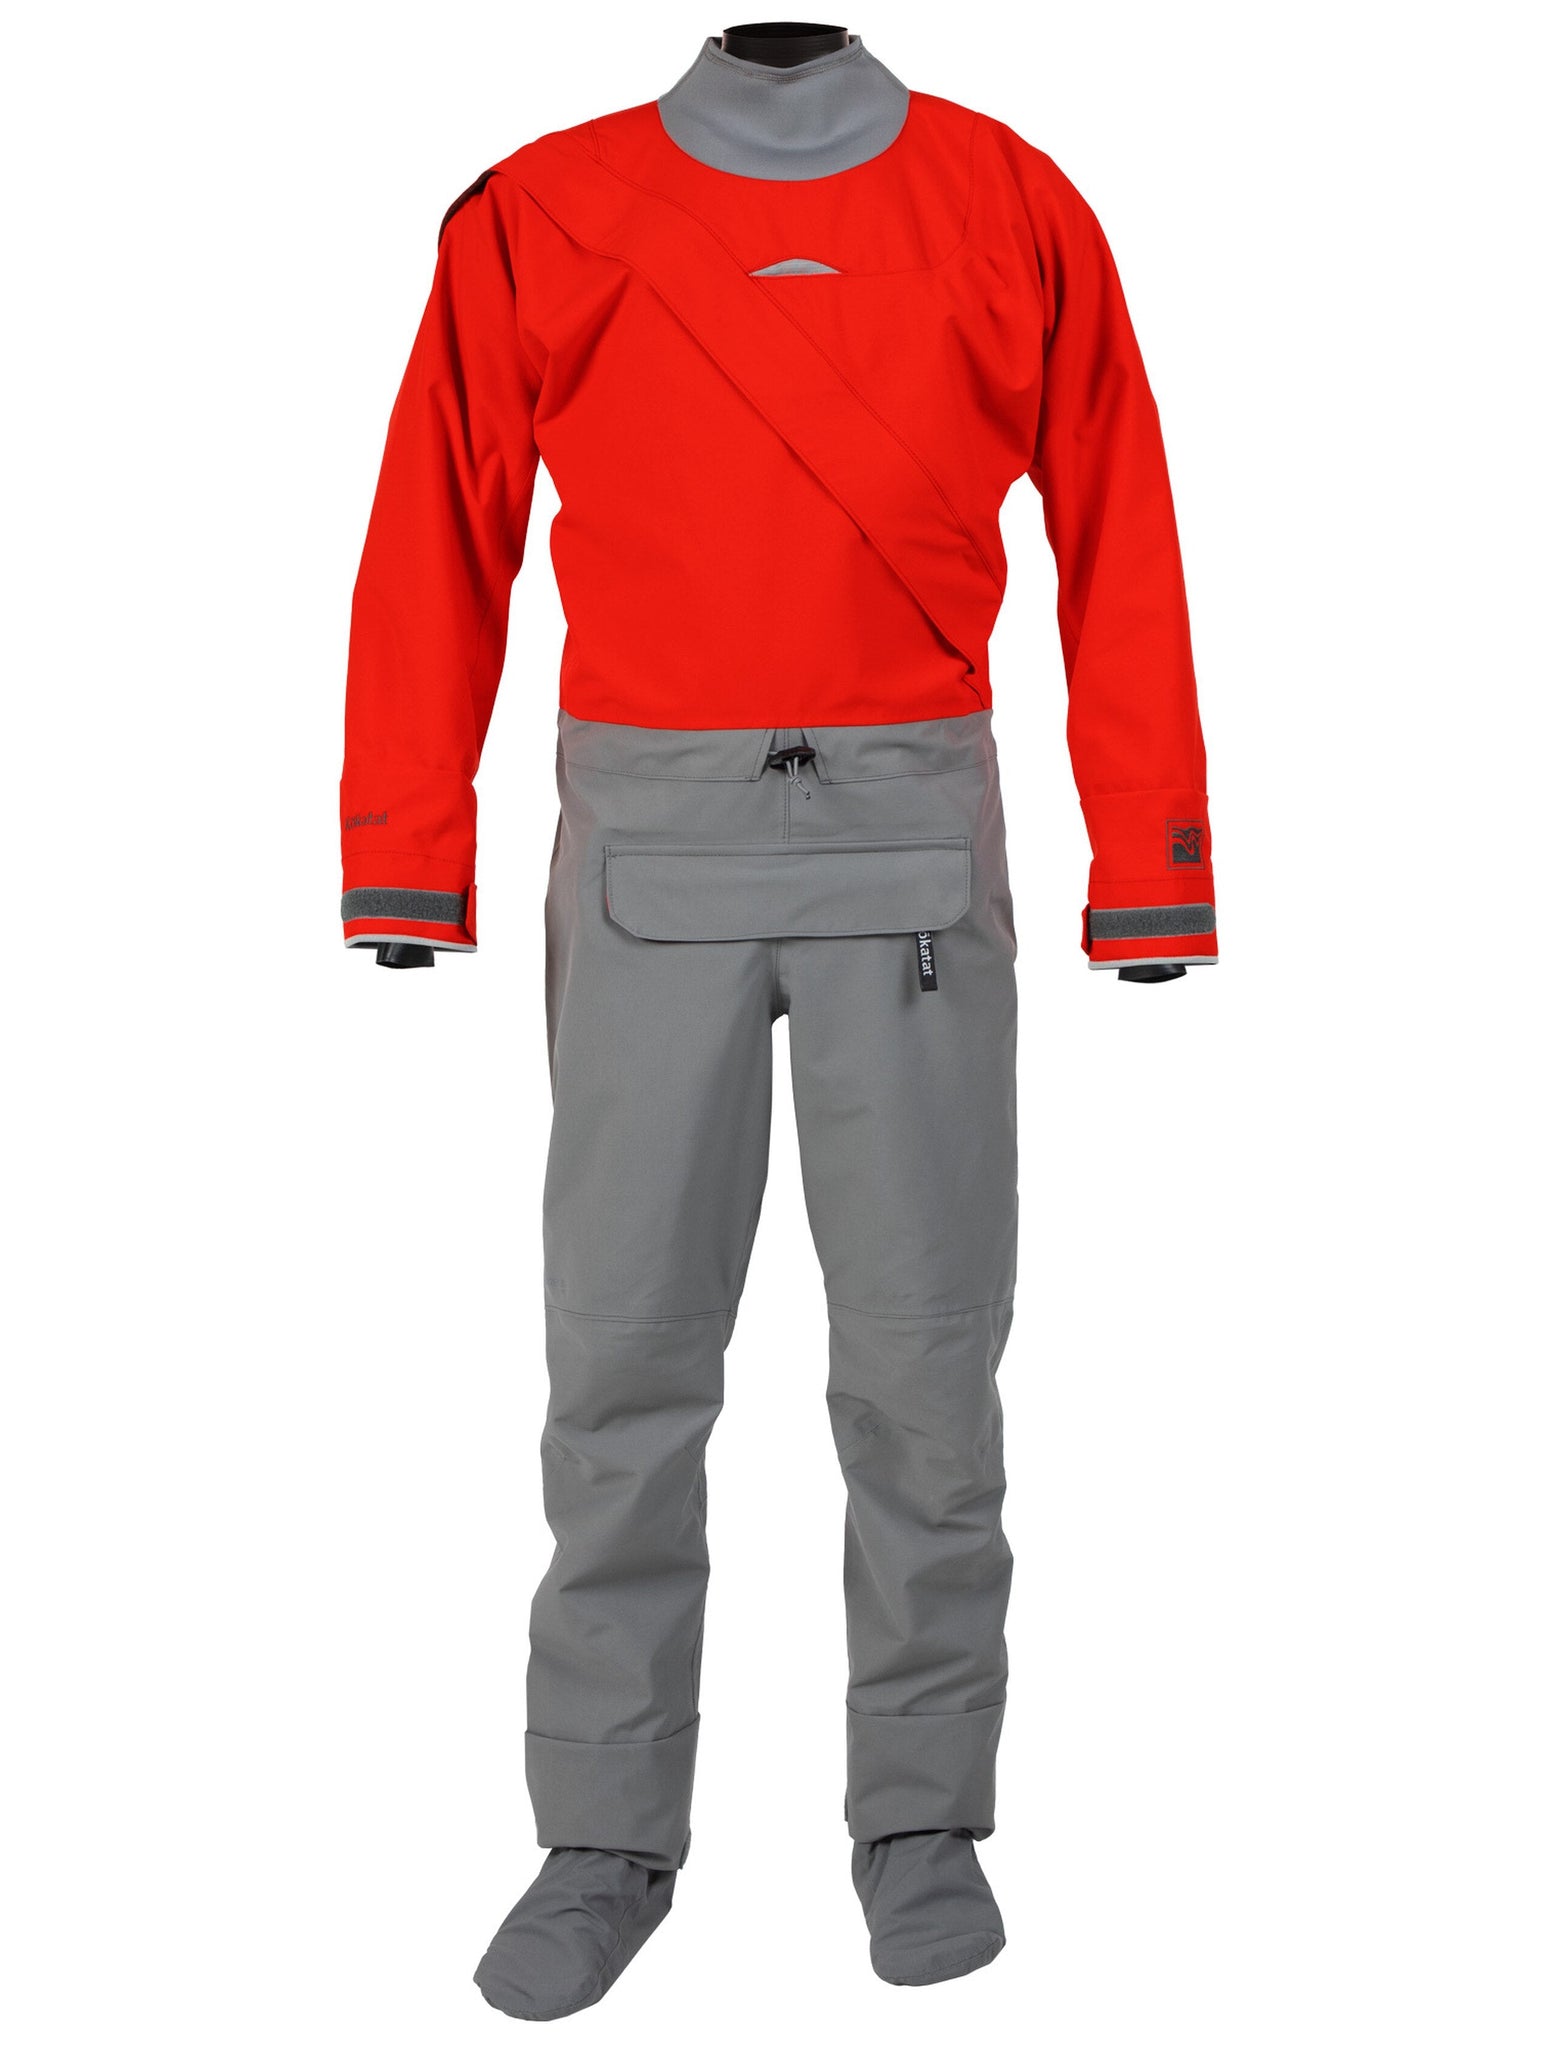 Kokatat GORE-TEX Pro Legacy Men's Dry Suit MD / Red